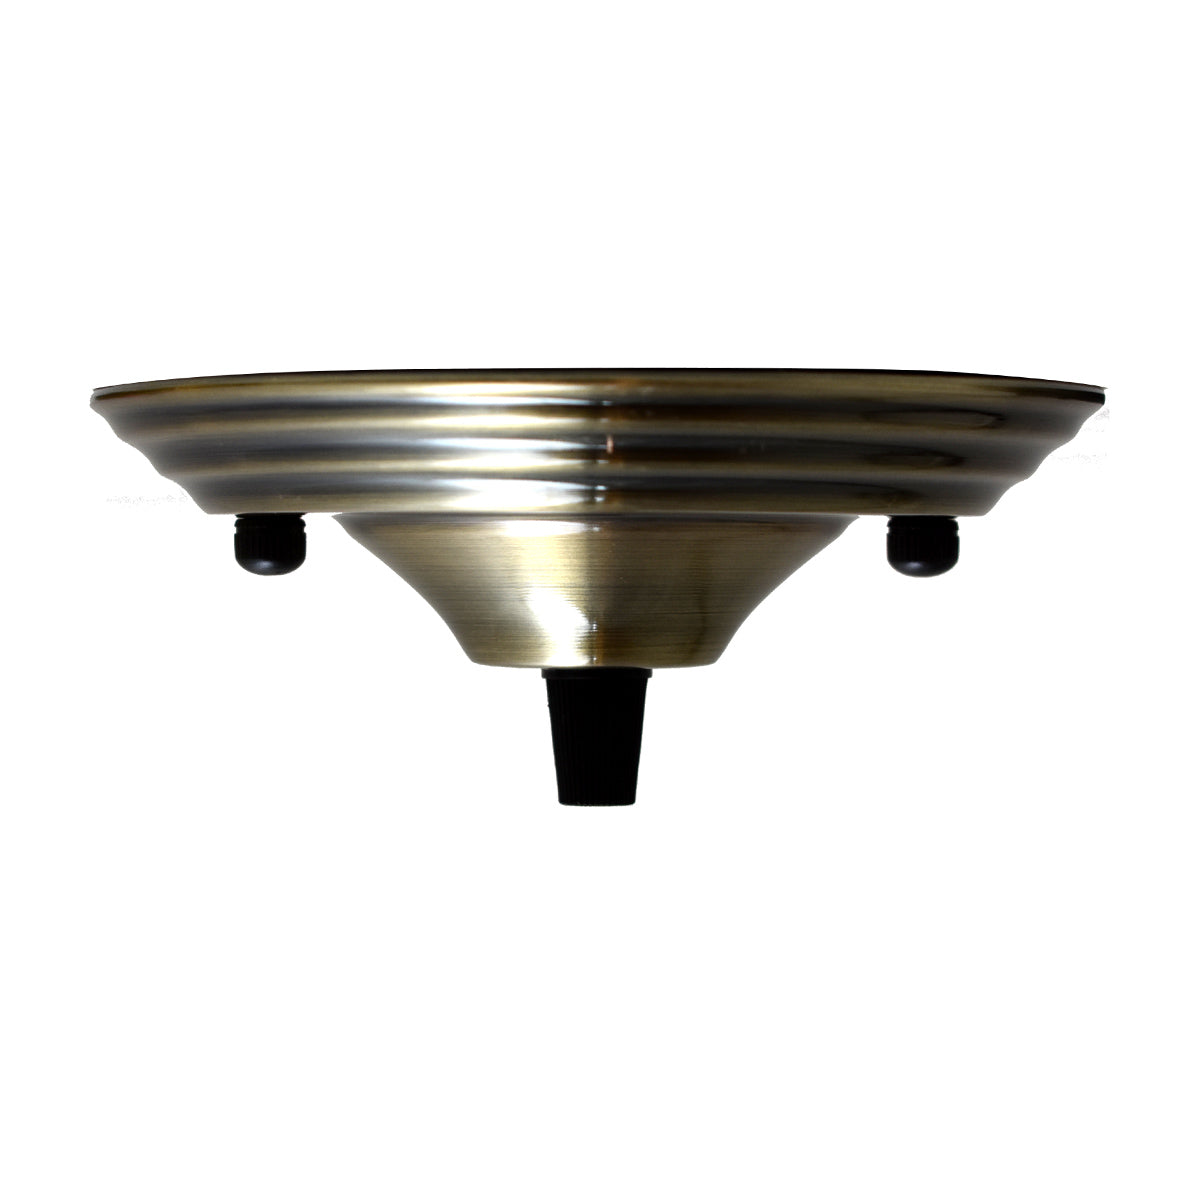 Pendant Cable Grip Flex Plate For Light Fitting 140mm Choose Green Brass Color Ceiling Rose~2655 - LEDSone UK Ltd